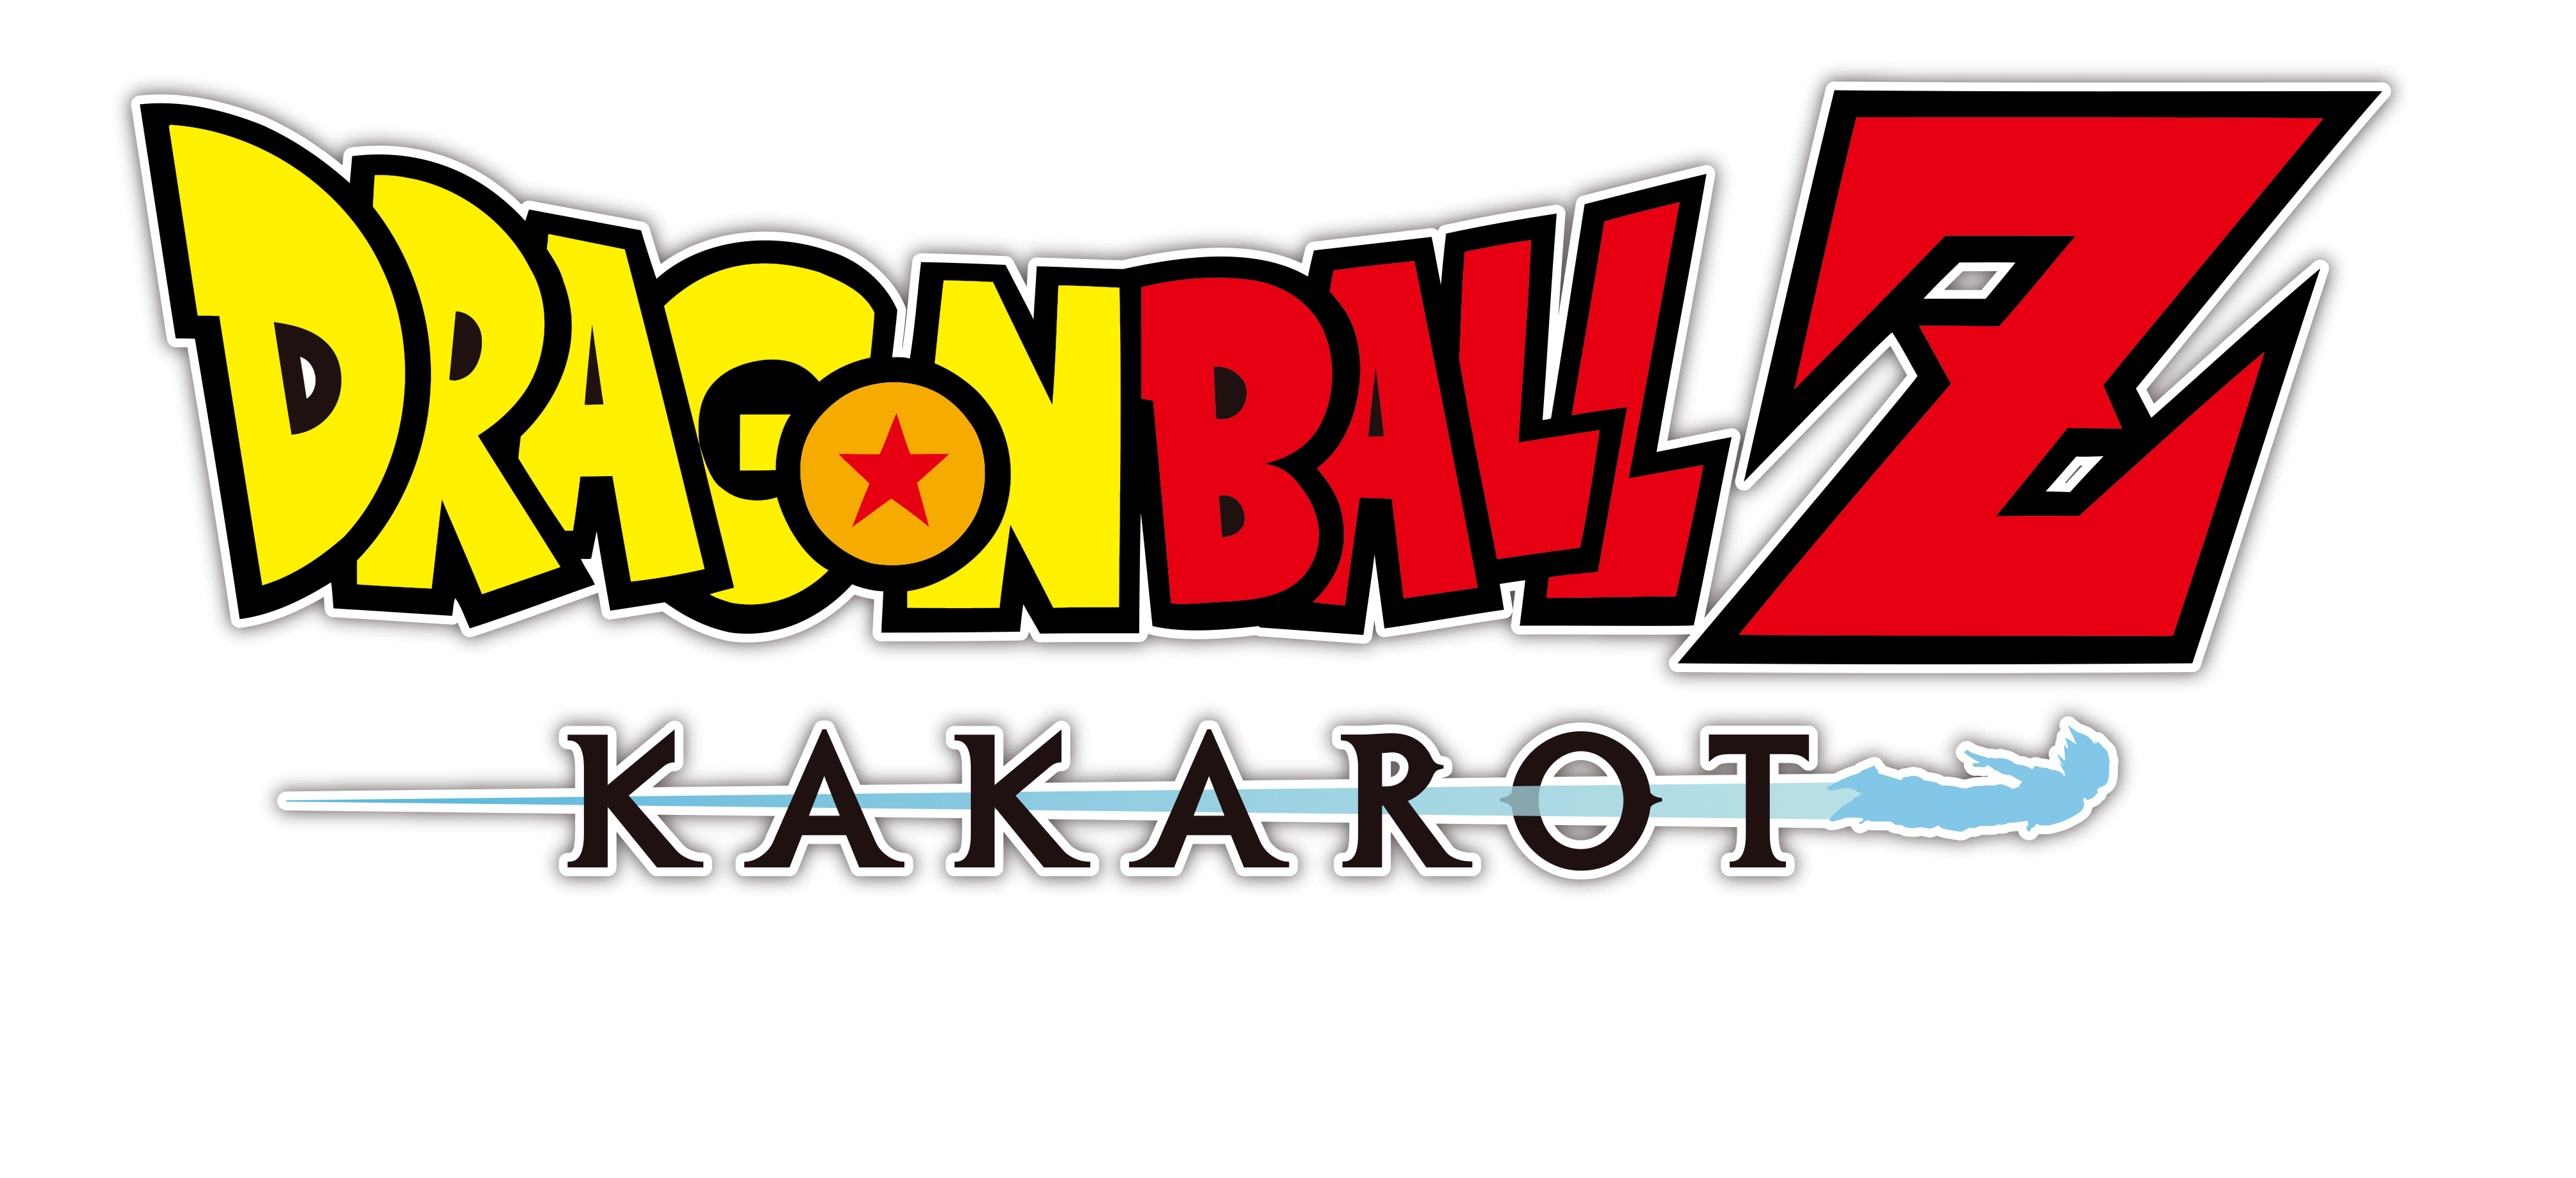 DRAGON BALL Z: KAKAROT + A NEW POWER AWAKENS SET